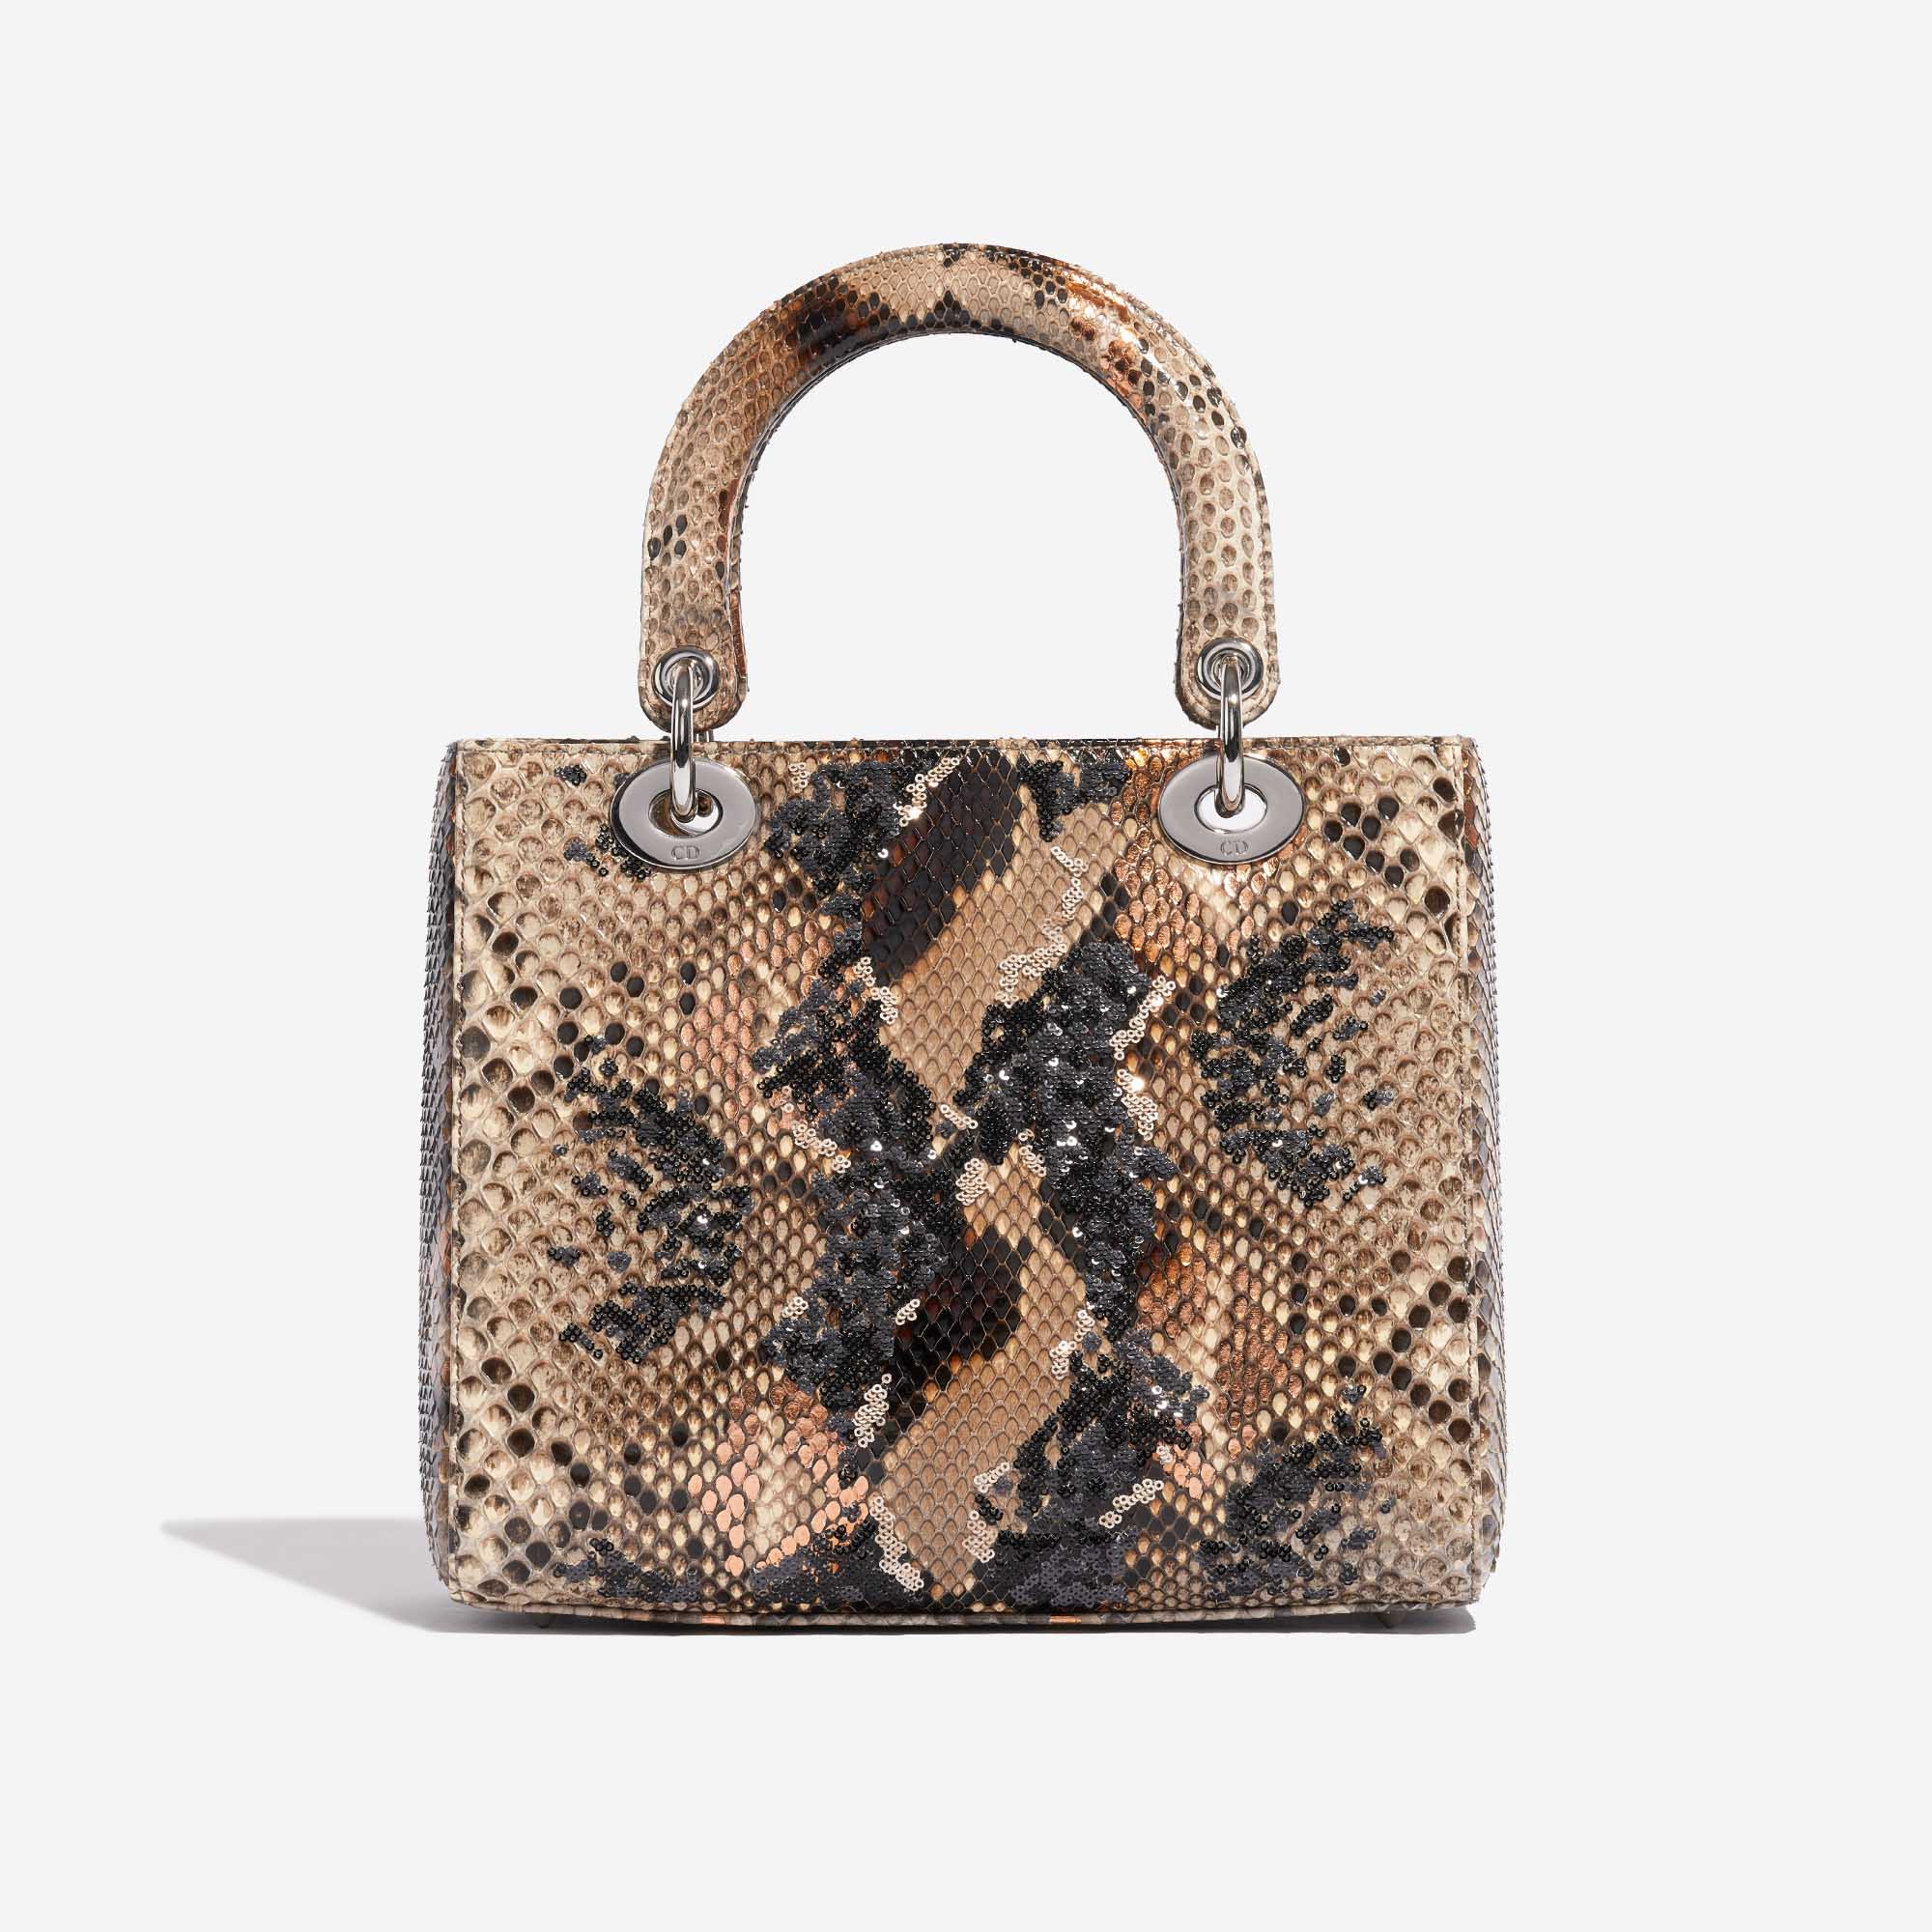 Pre-owned Dior bag Lady Medium Python / Sequins Beige / Black / Orange Beige, Black, Orange Back | Sell your designer bag on Saclab.com